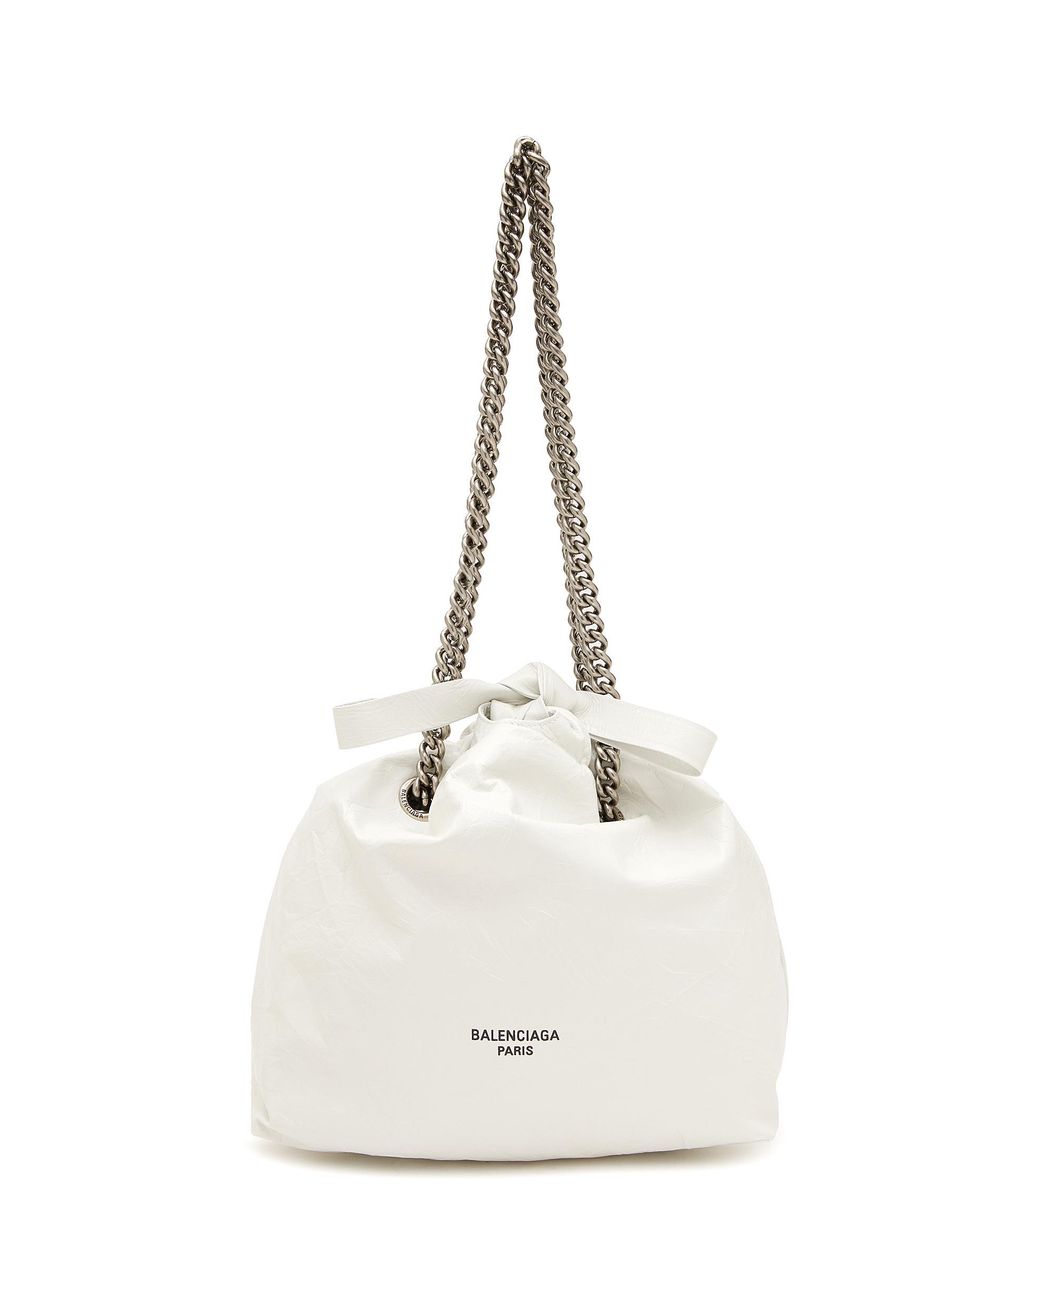 Balenciaga Small 'crush' Chain Handle Leather Tote Bag in White | Lyst